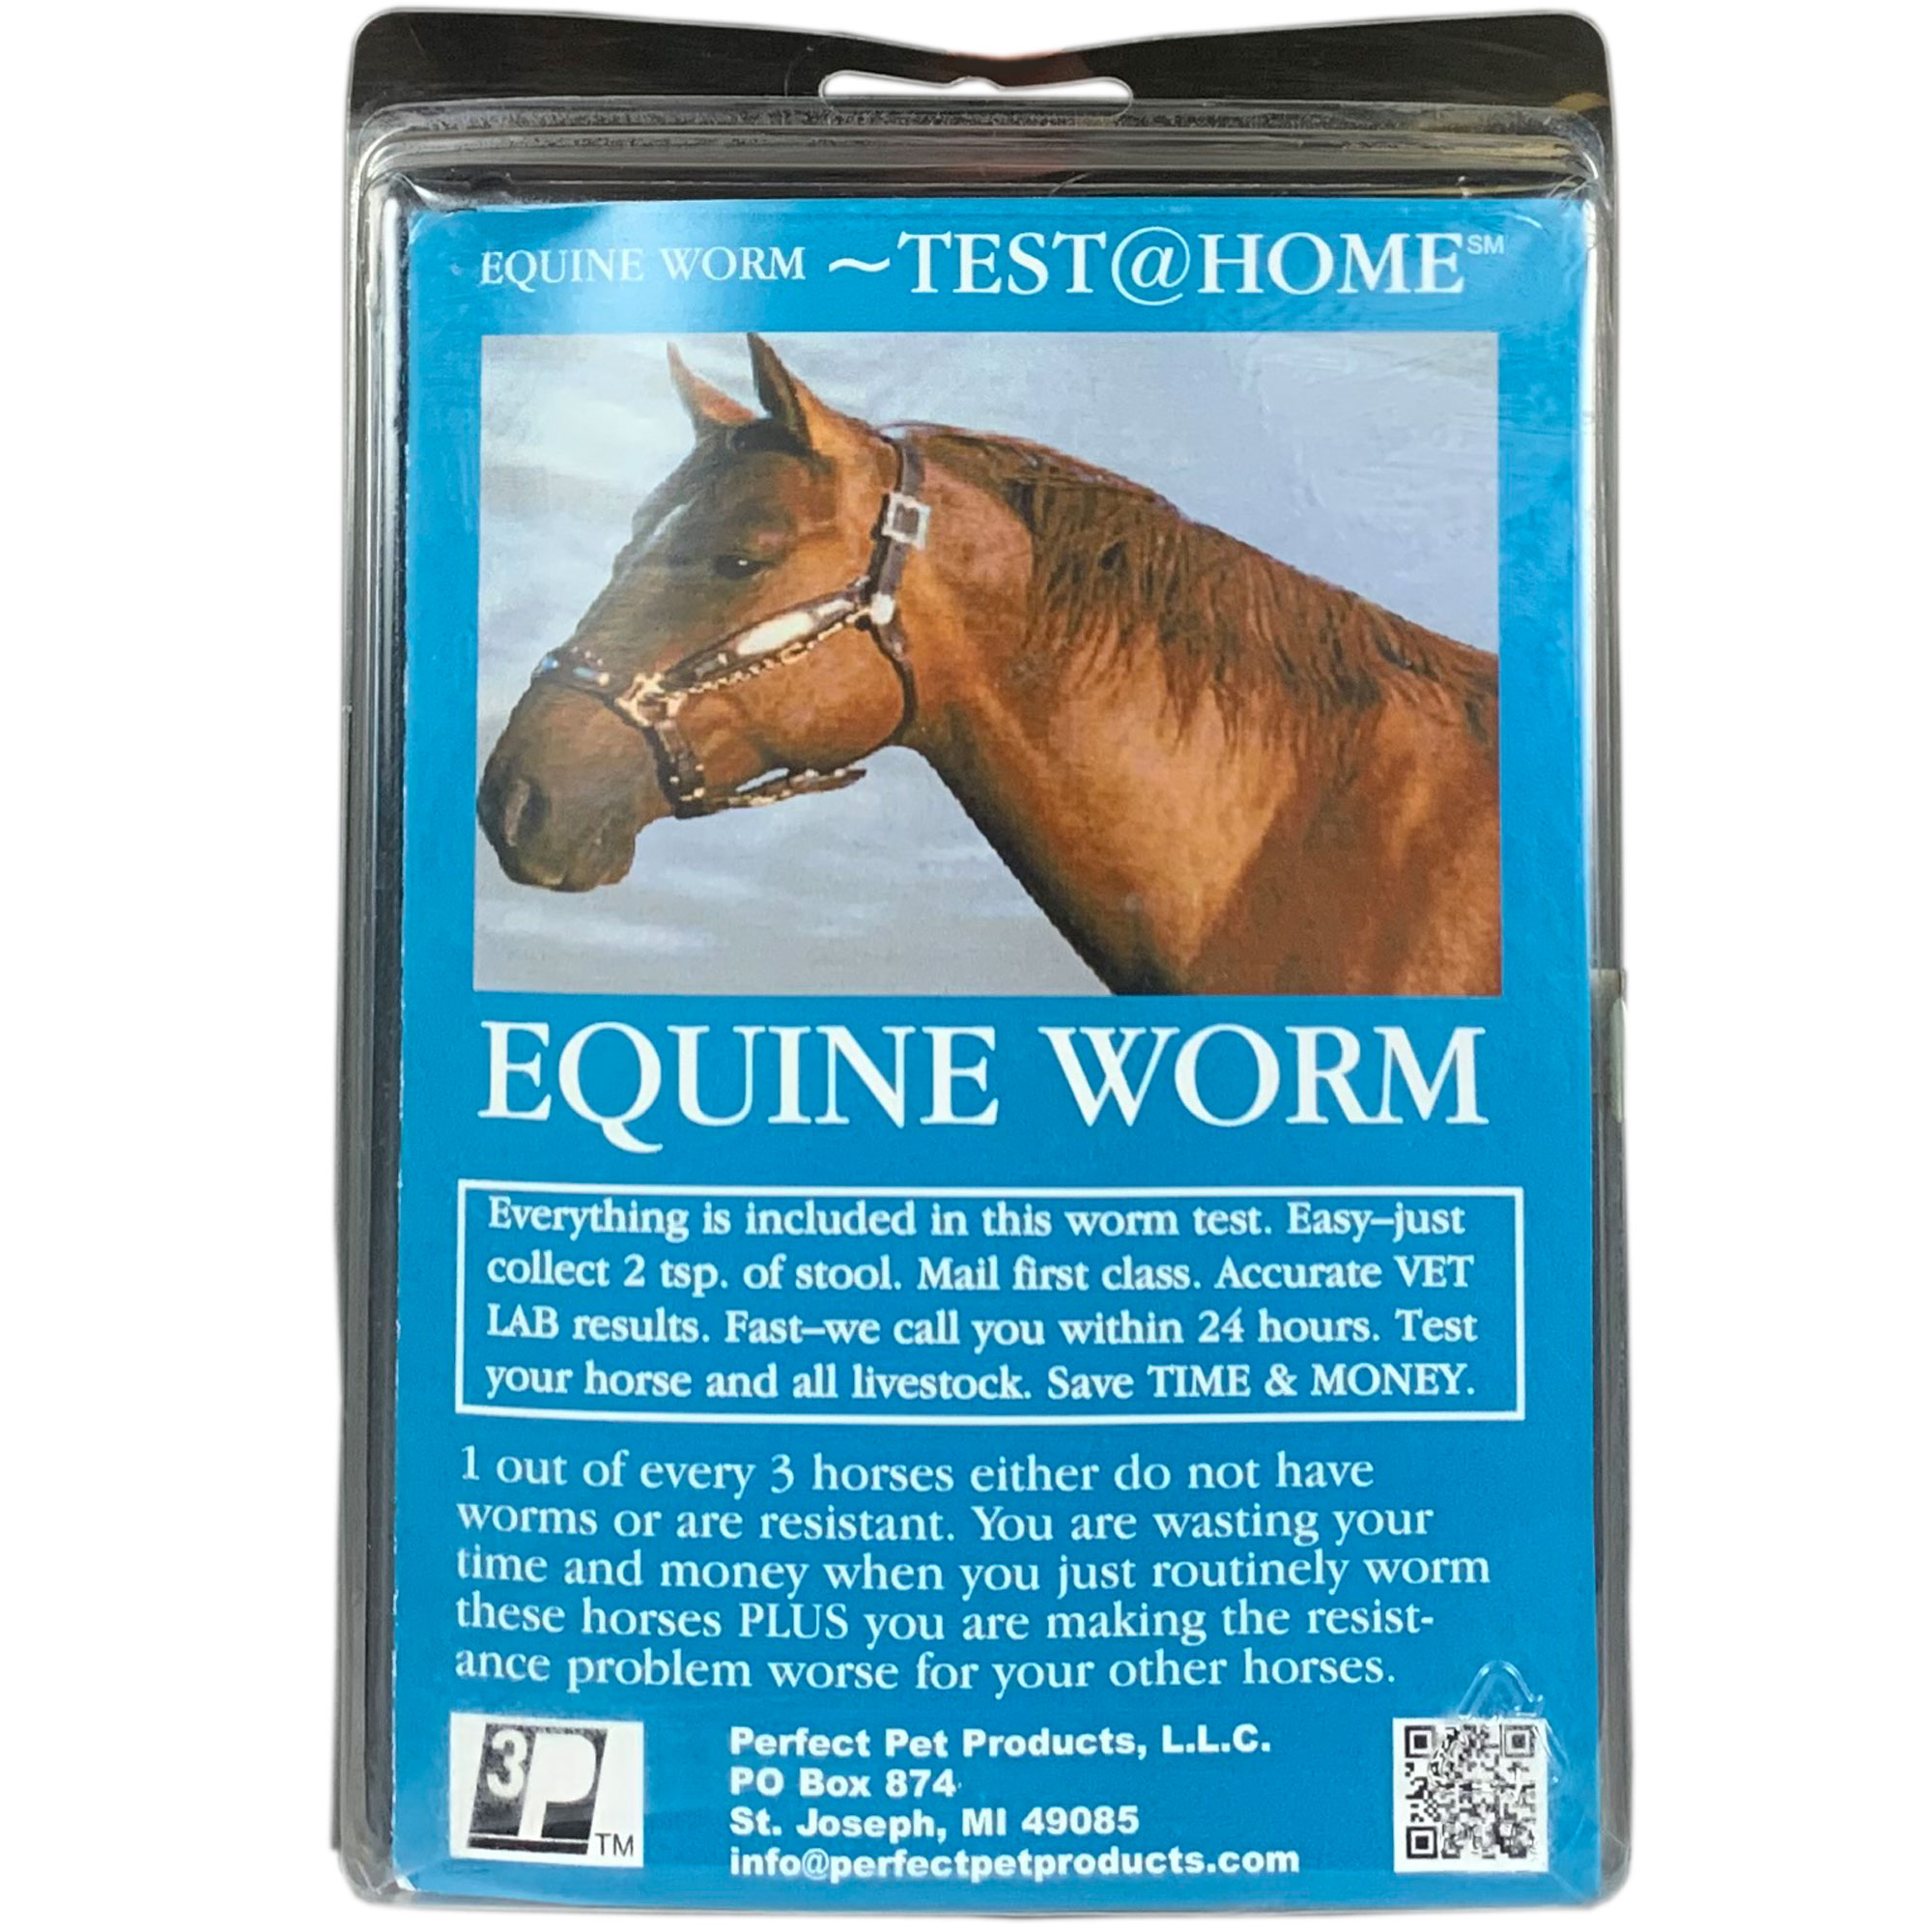 Equine Worm Test@Home Kit Usage